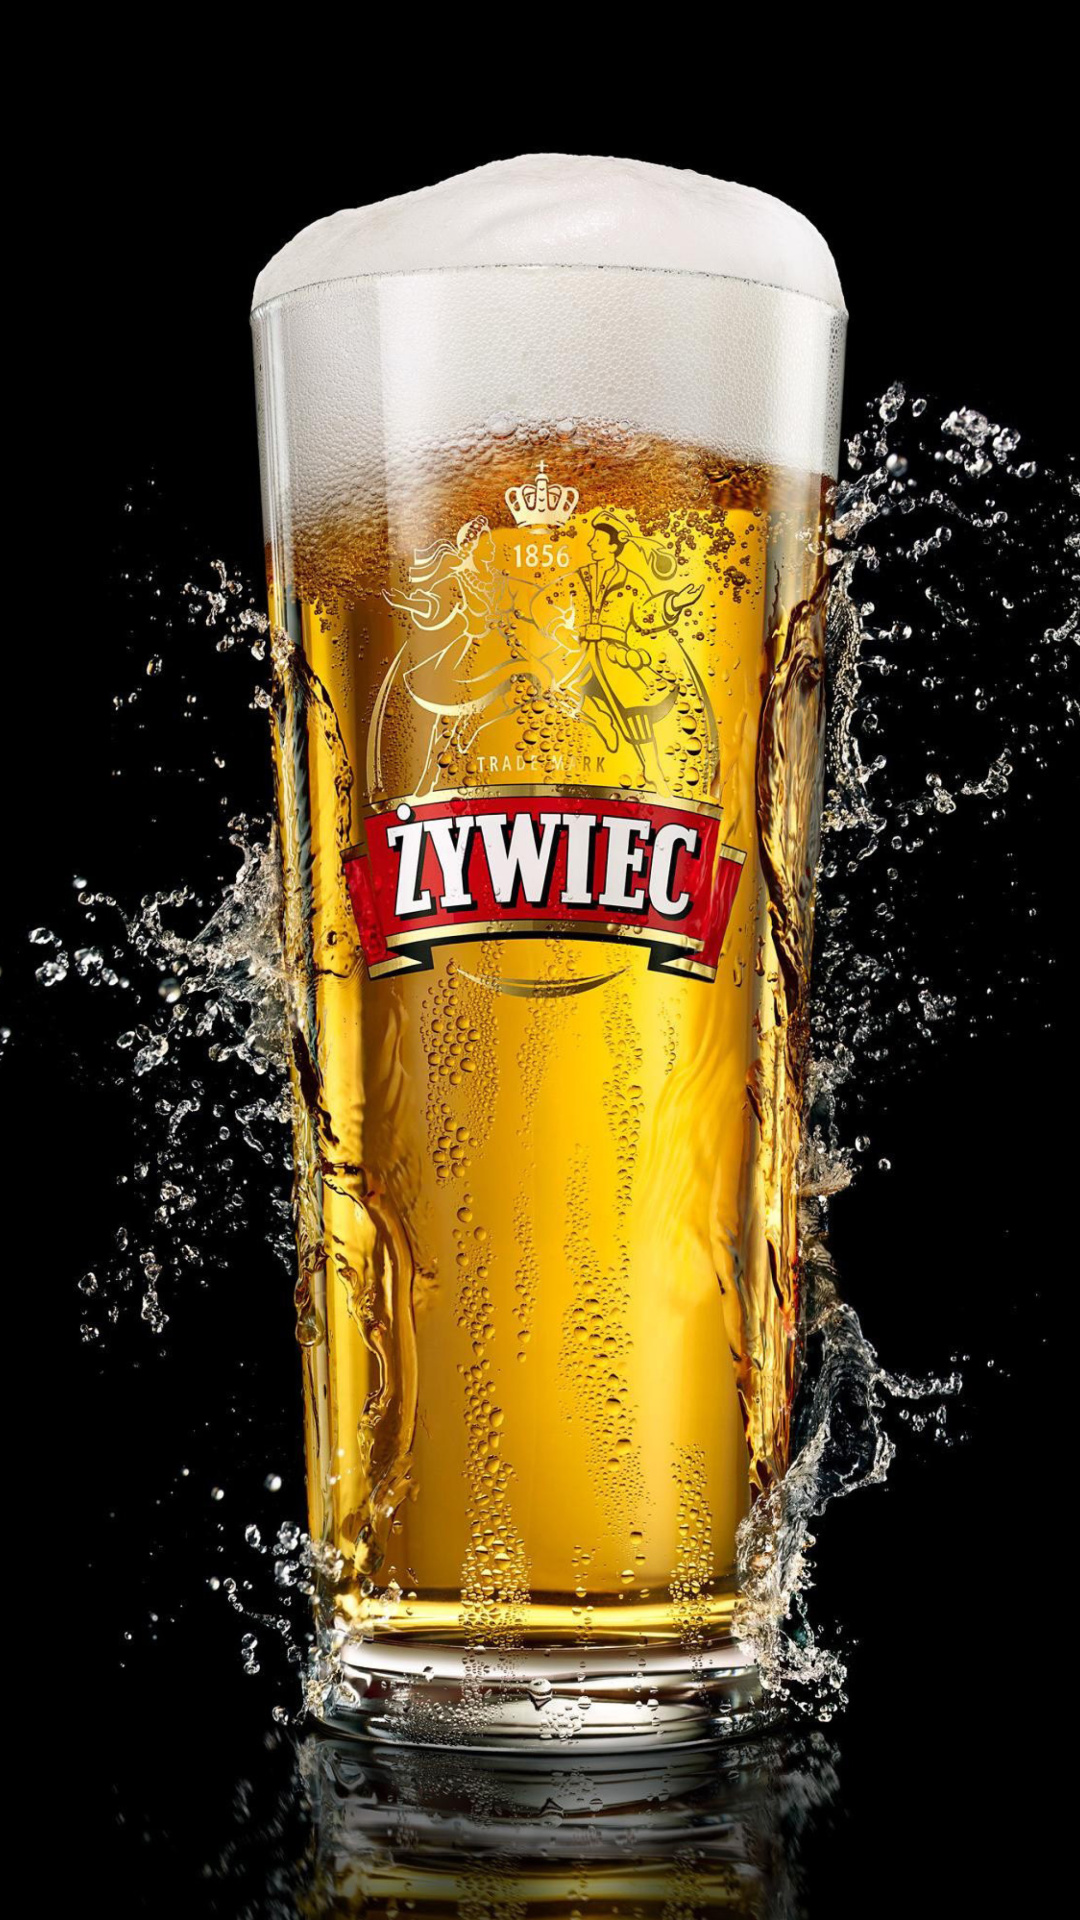 Zywiec Beer wallpaper 1080x1920